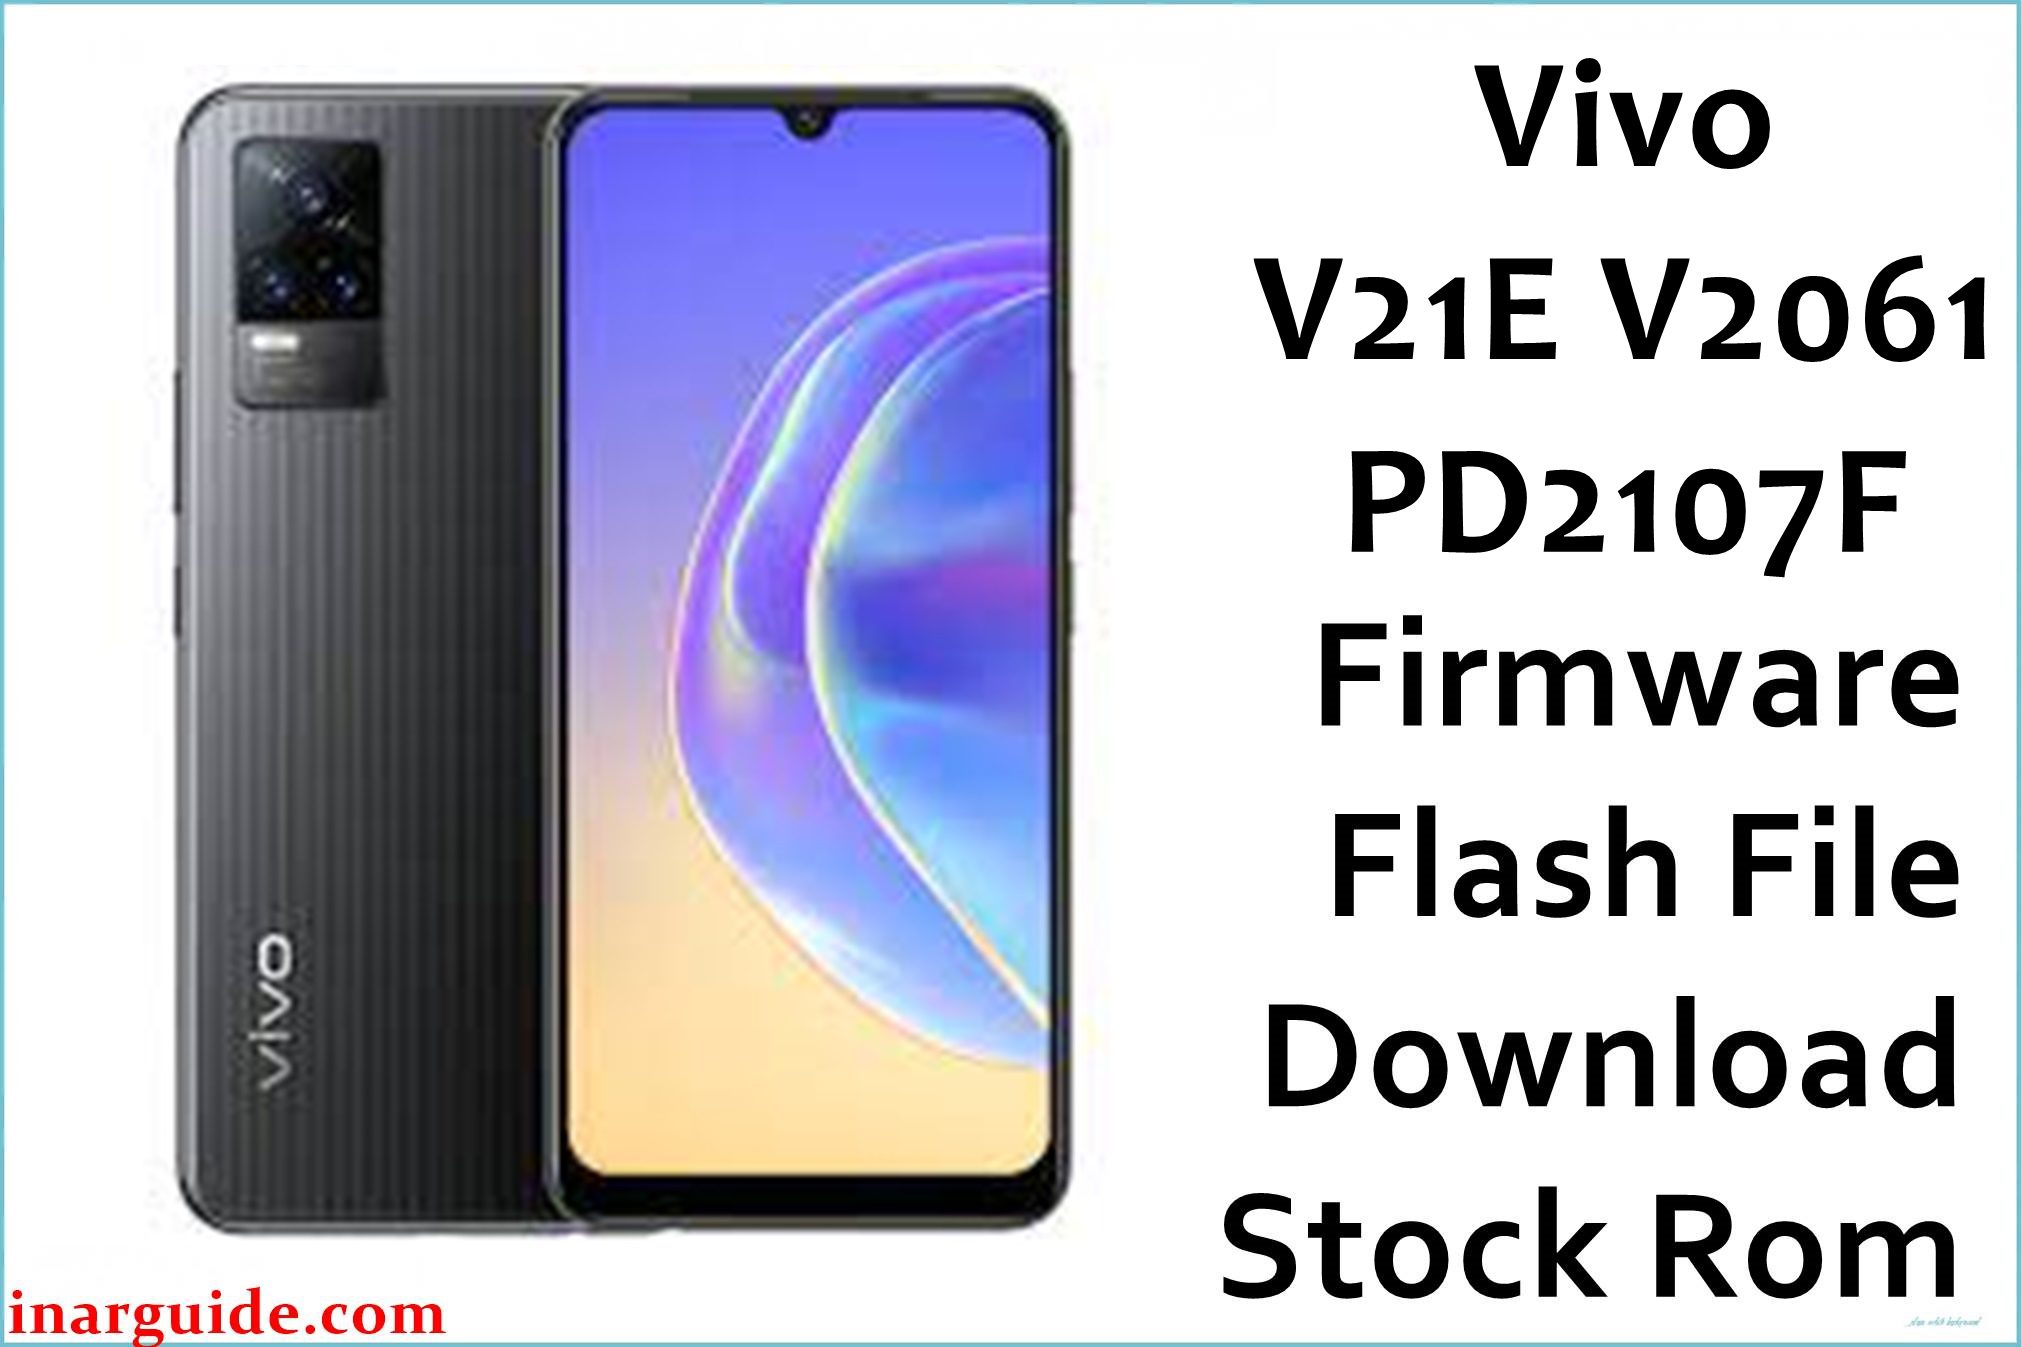 Vivo V21E V2061 PD2107F